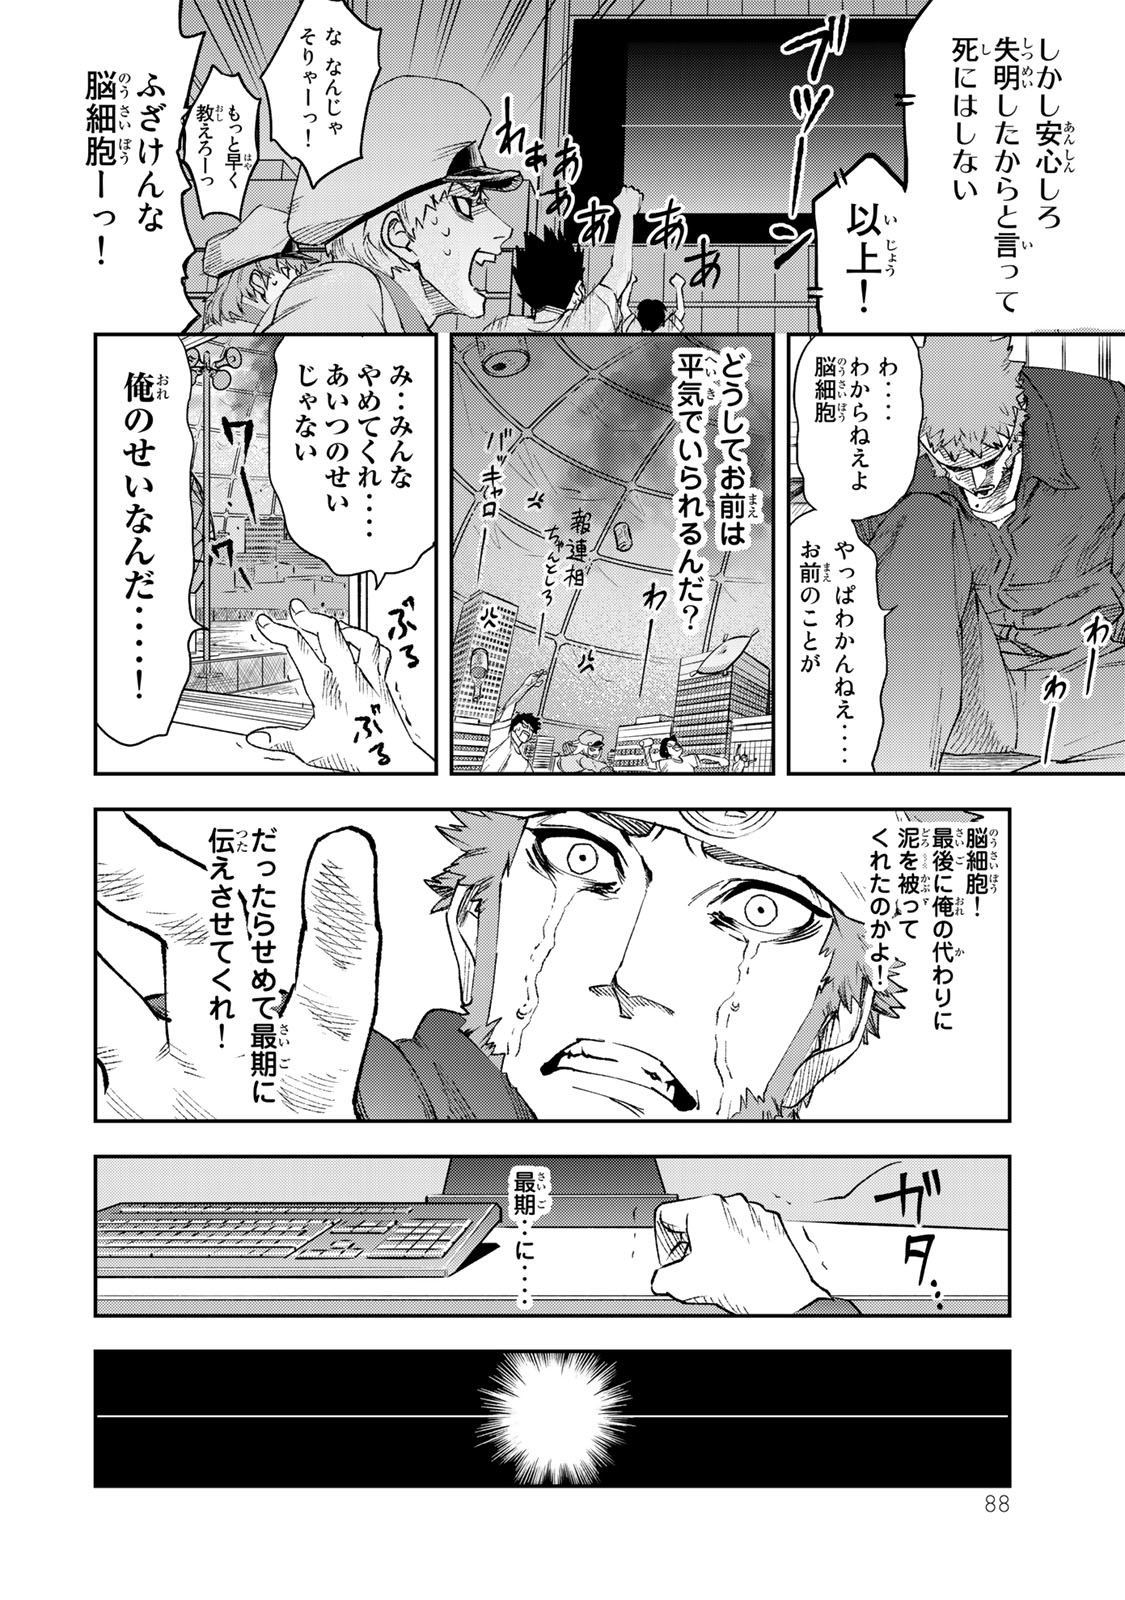 Hataraku Saibou - Chapter 28 - Page 34